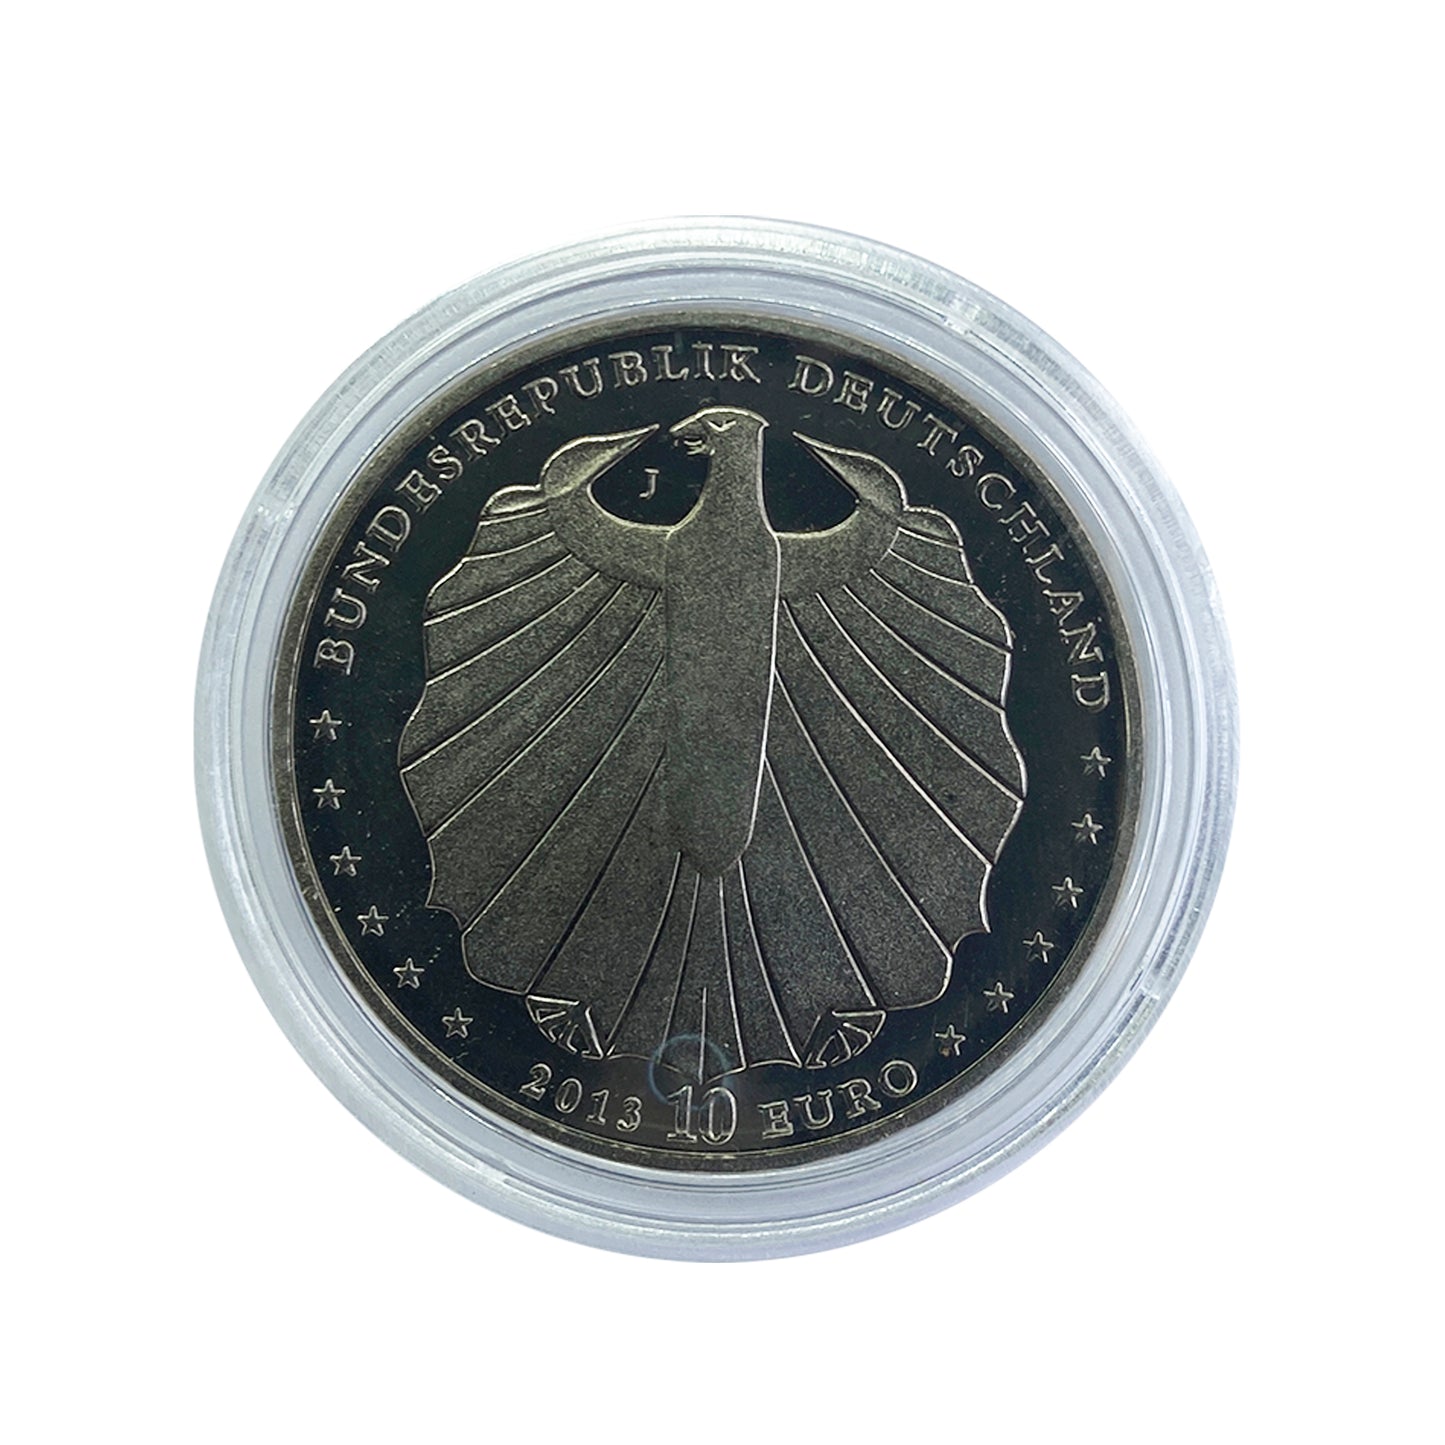 Alemania - Moneda 10 euros cuproníquel 2013 - Blancanieves